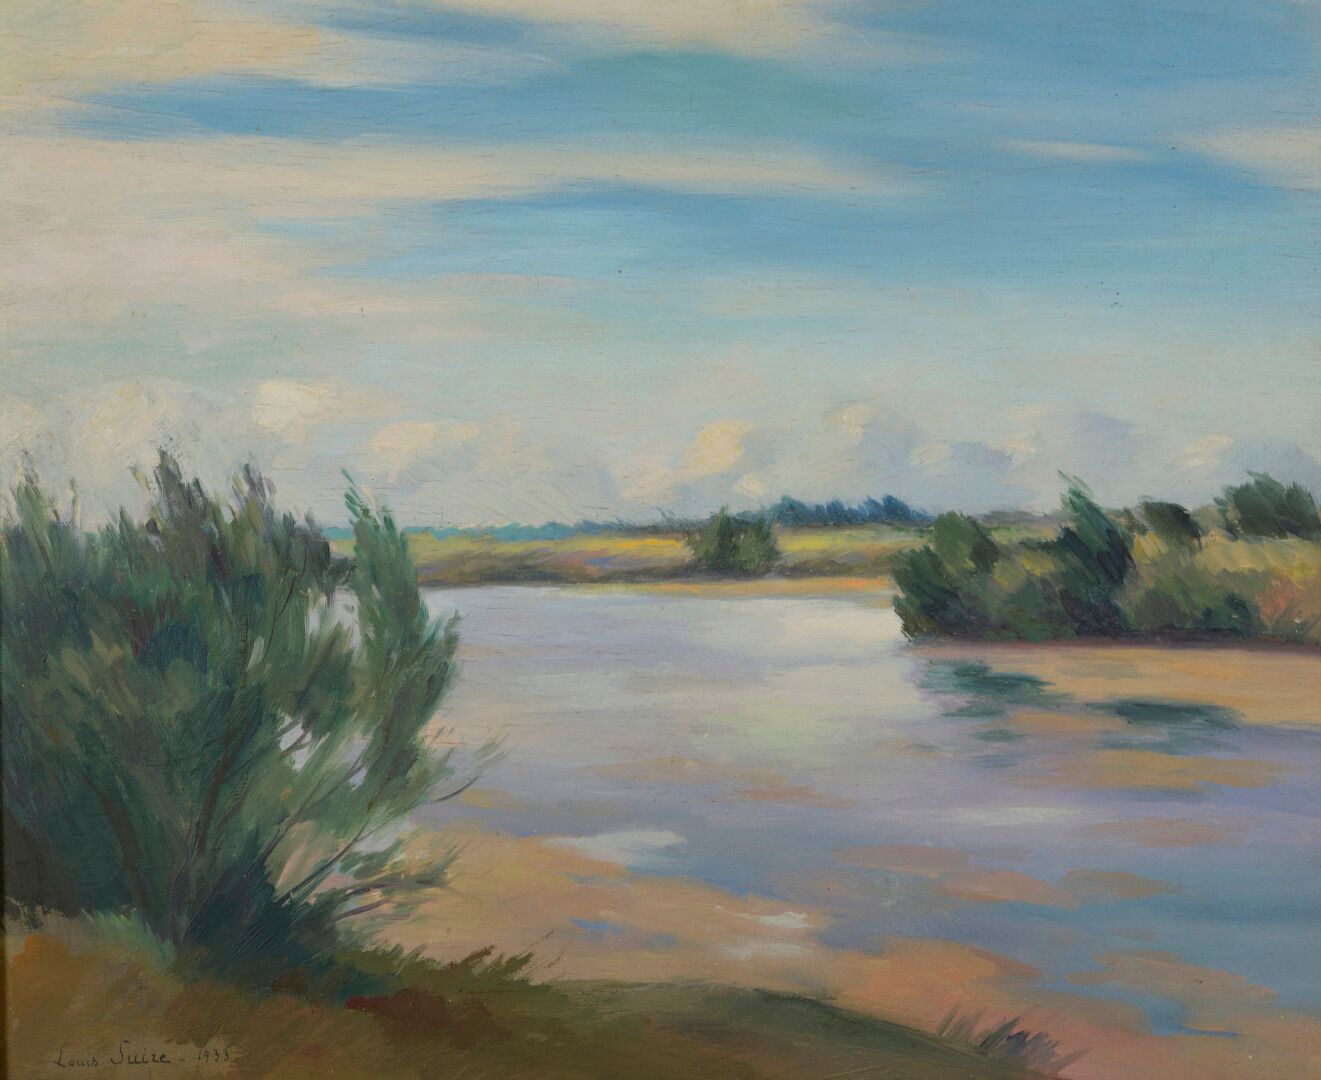 Louis SUIRE (1899-1987) 路易斯-苏伊里(1899-1987)

里岛阿尔斯之门附近的潮汐

板面油画，已签名并注明日期1933年

左下&hellip;